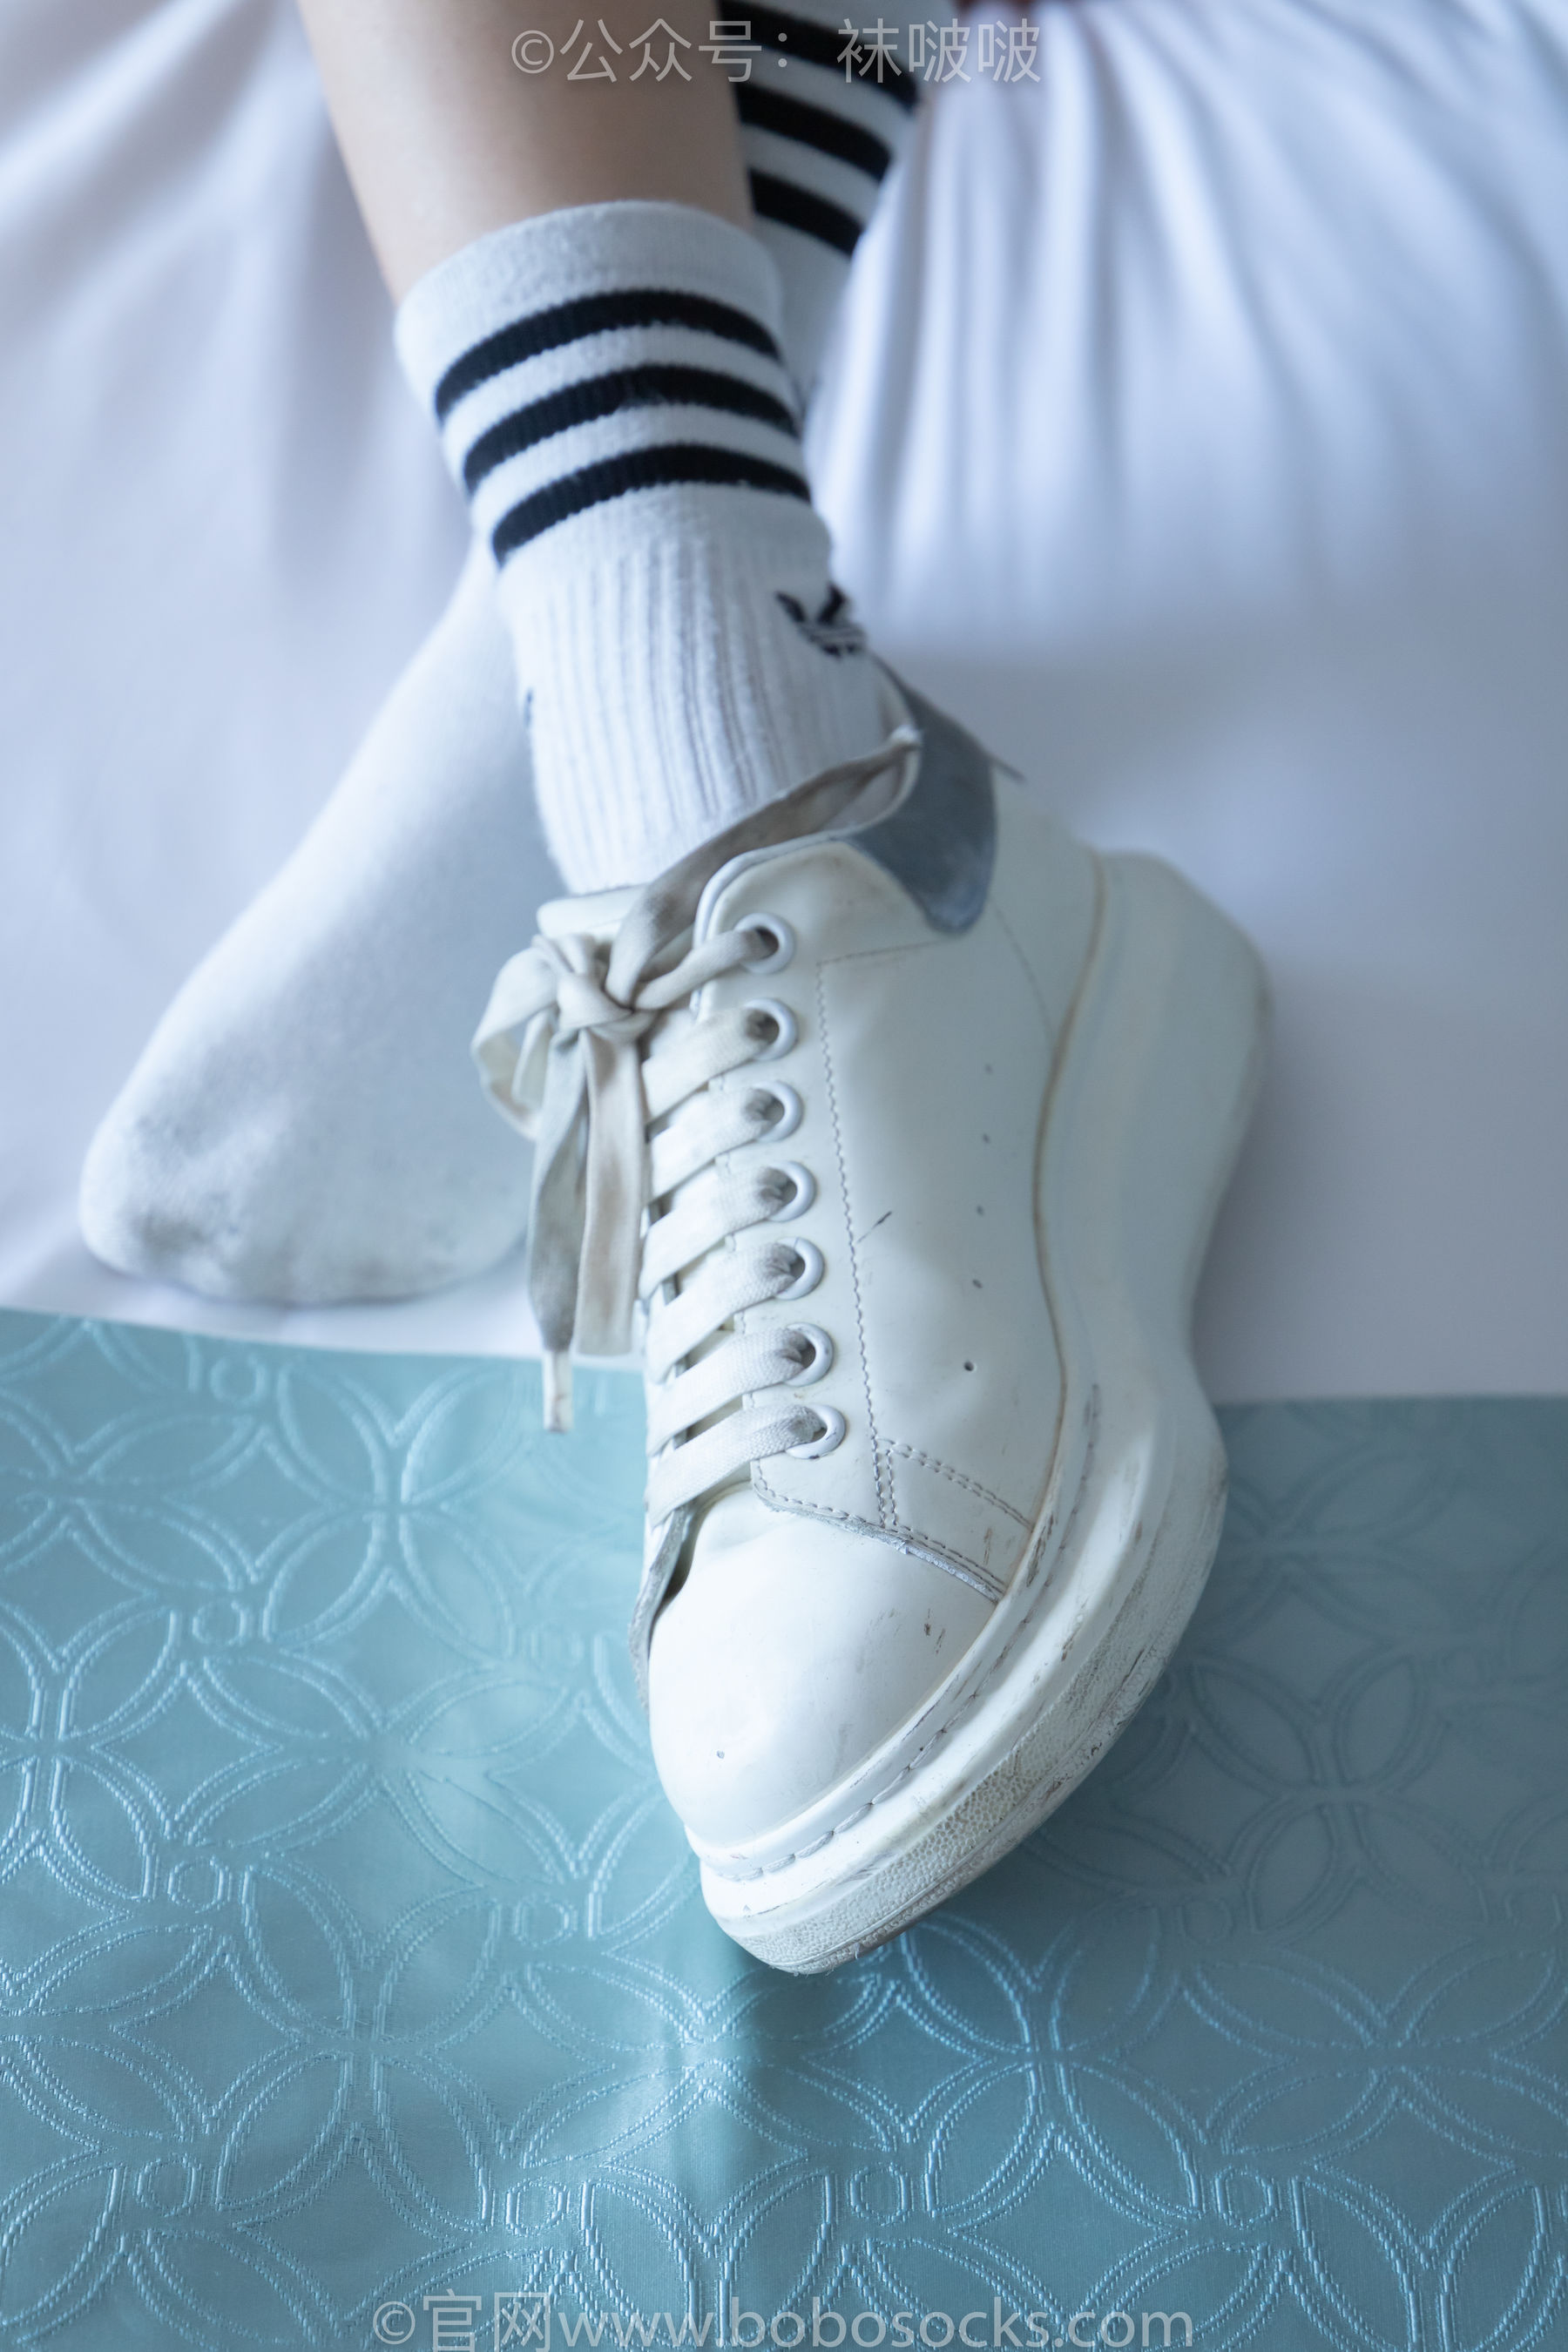 BoBoSocks袜啵啵 No.003 果冻-麦昆鞋、白色脏棉袜/(133P)